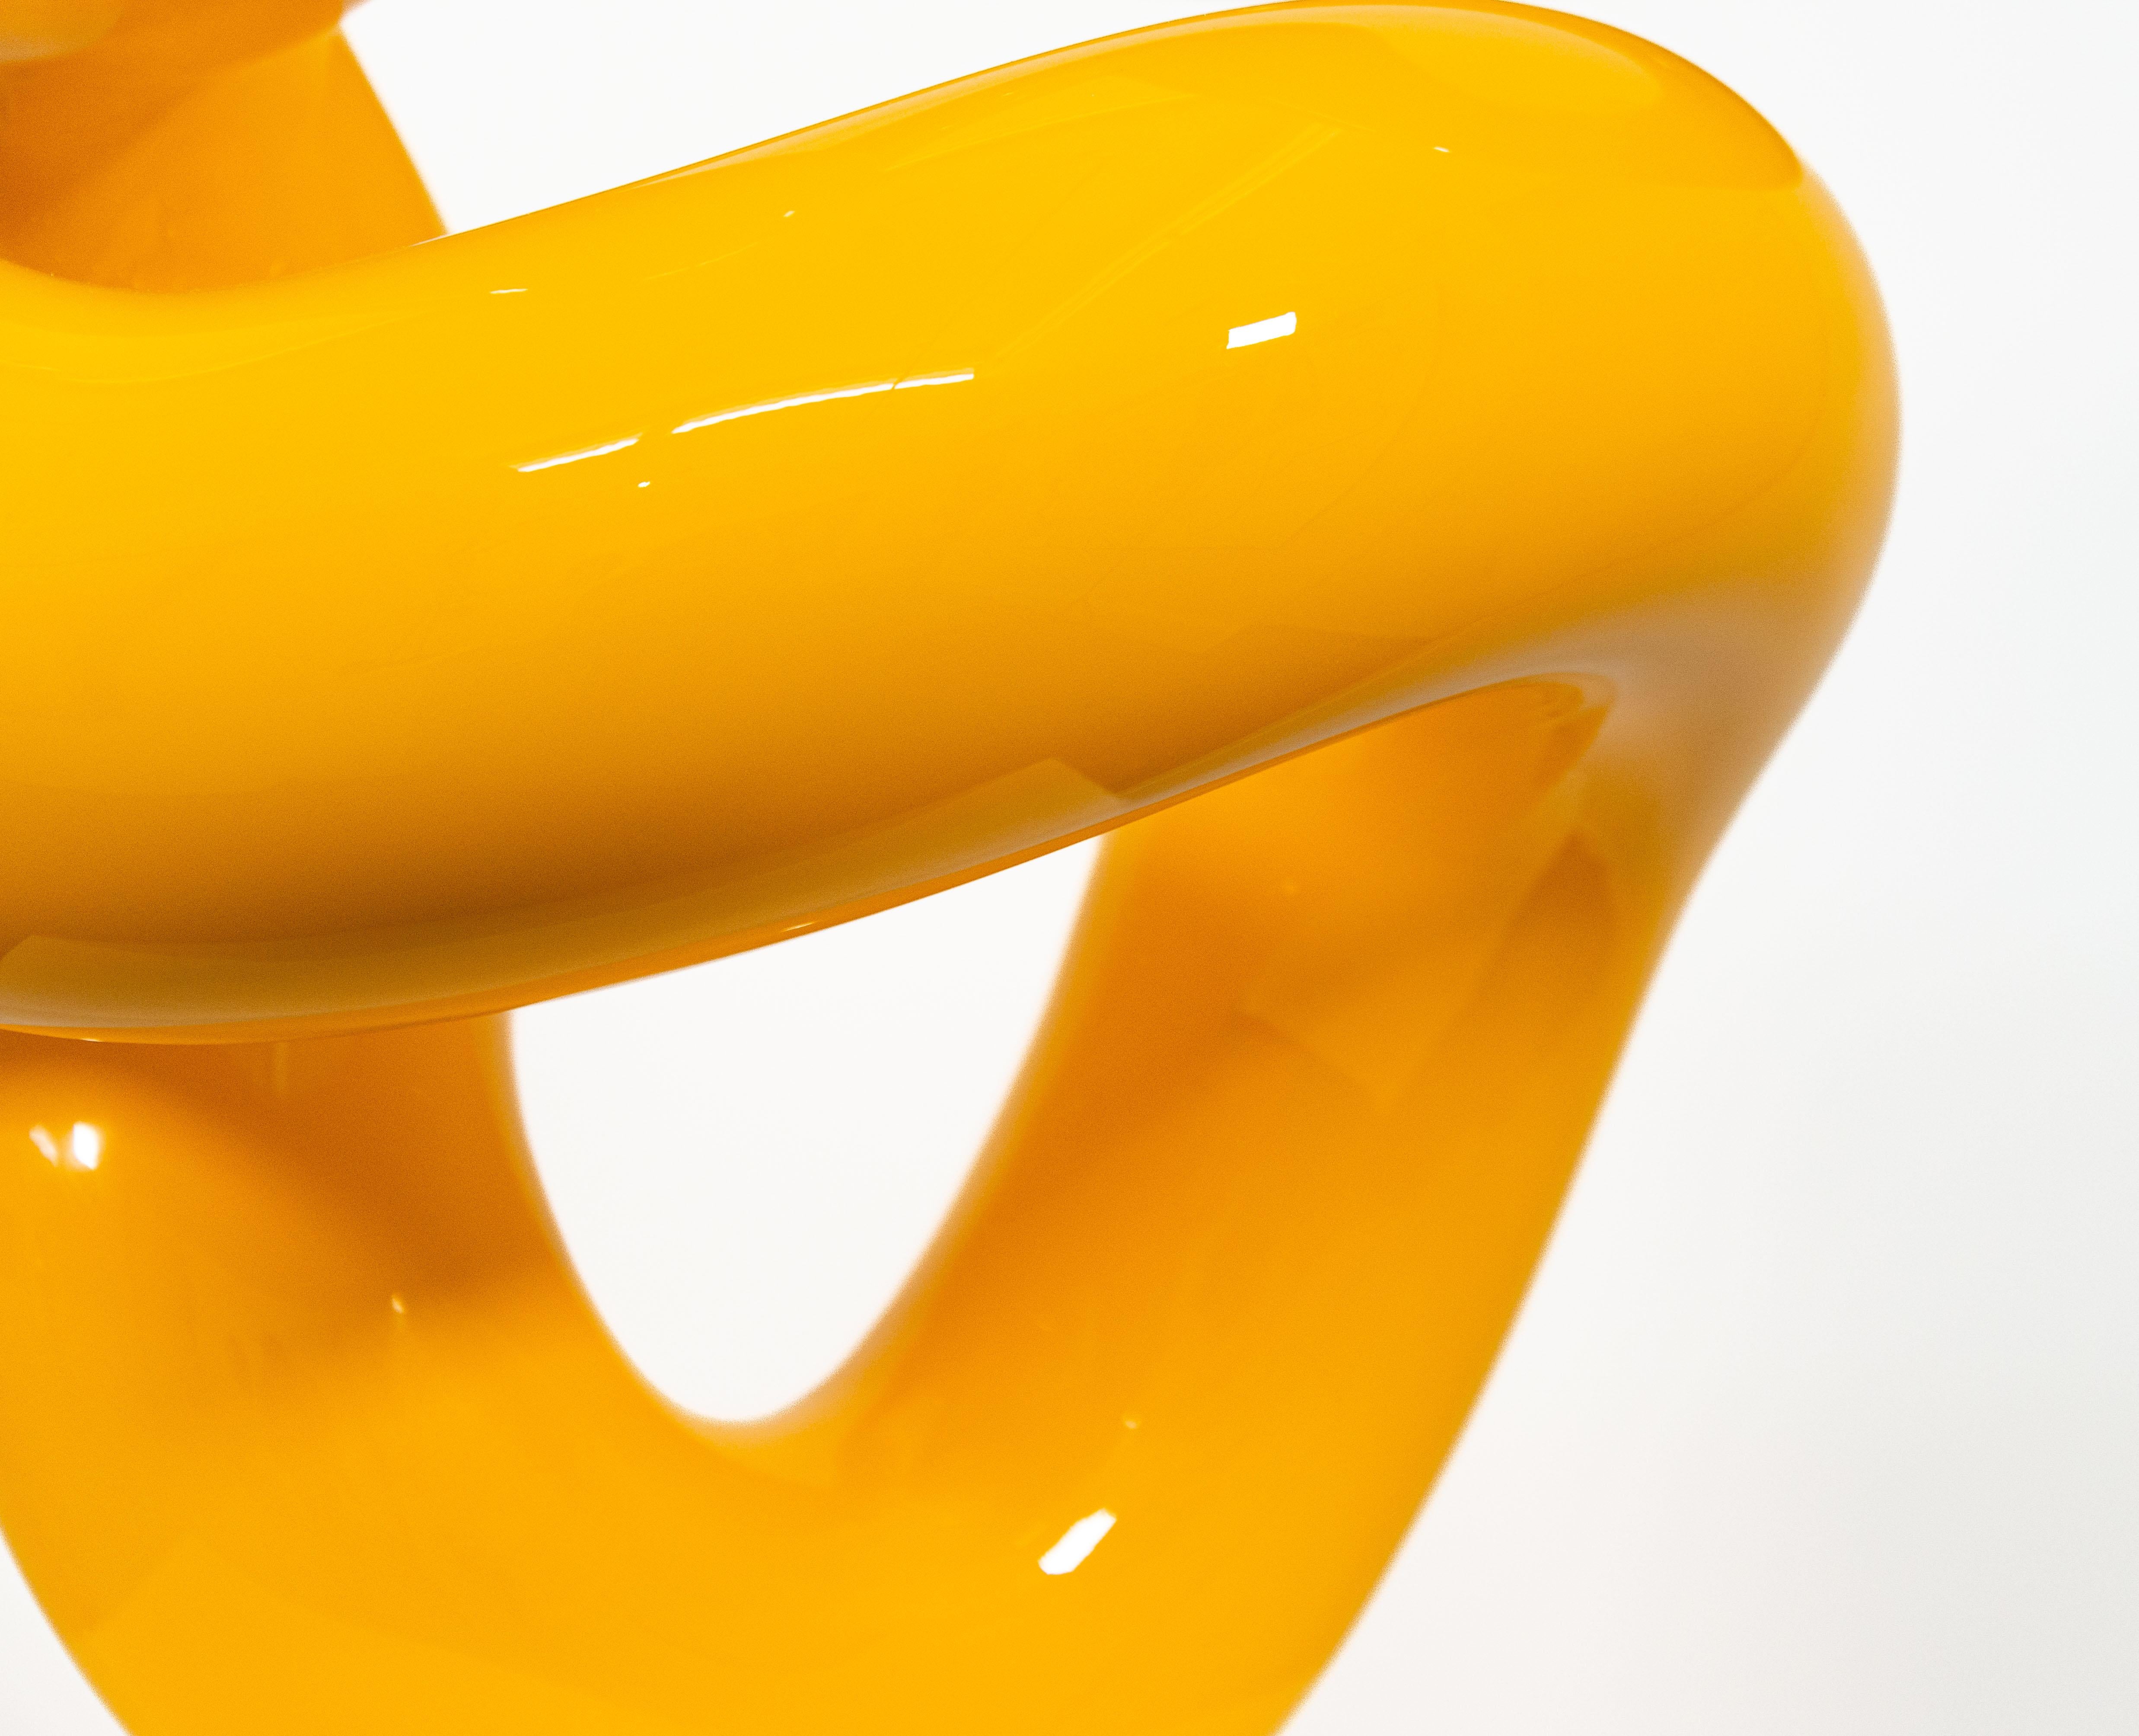 Circuit jaune - sculpture en acier inoxydable poli, abstraite et peinte en vente 1